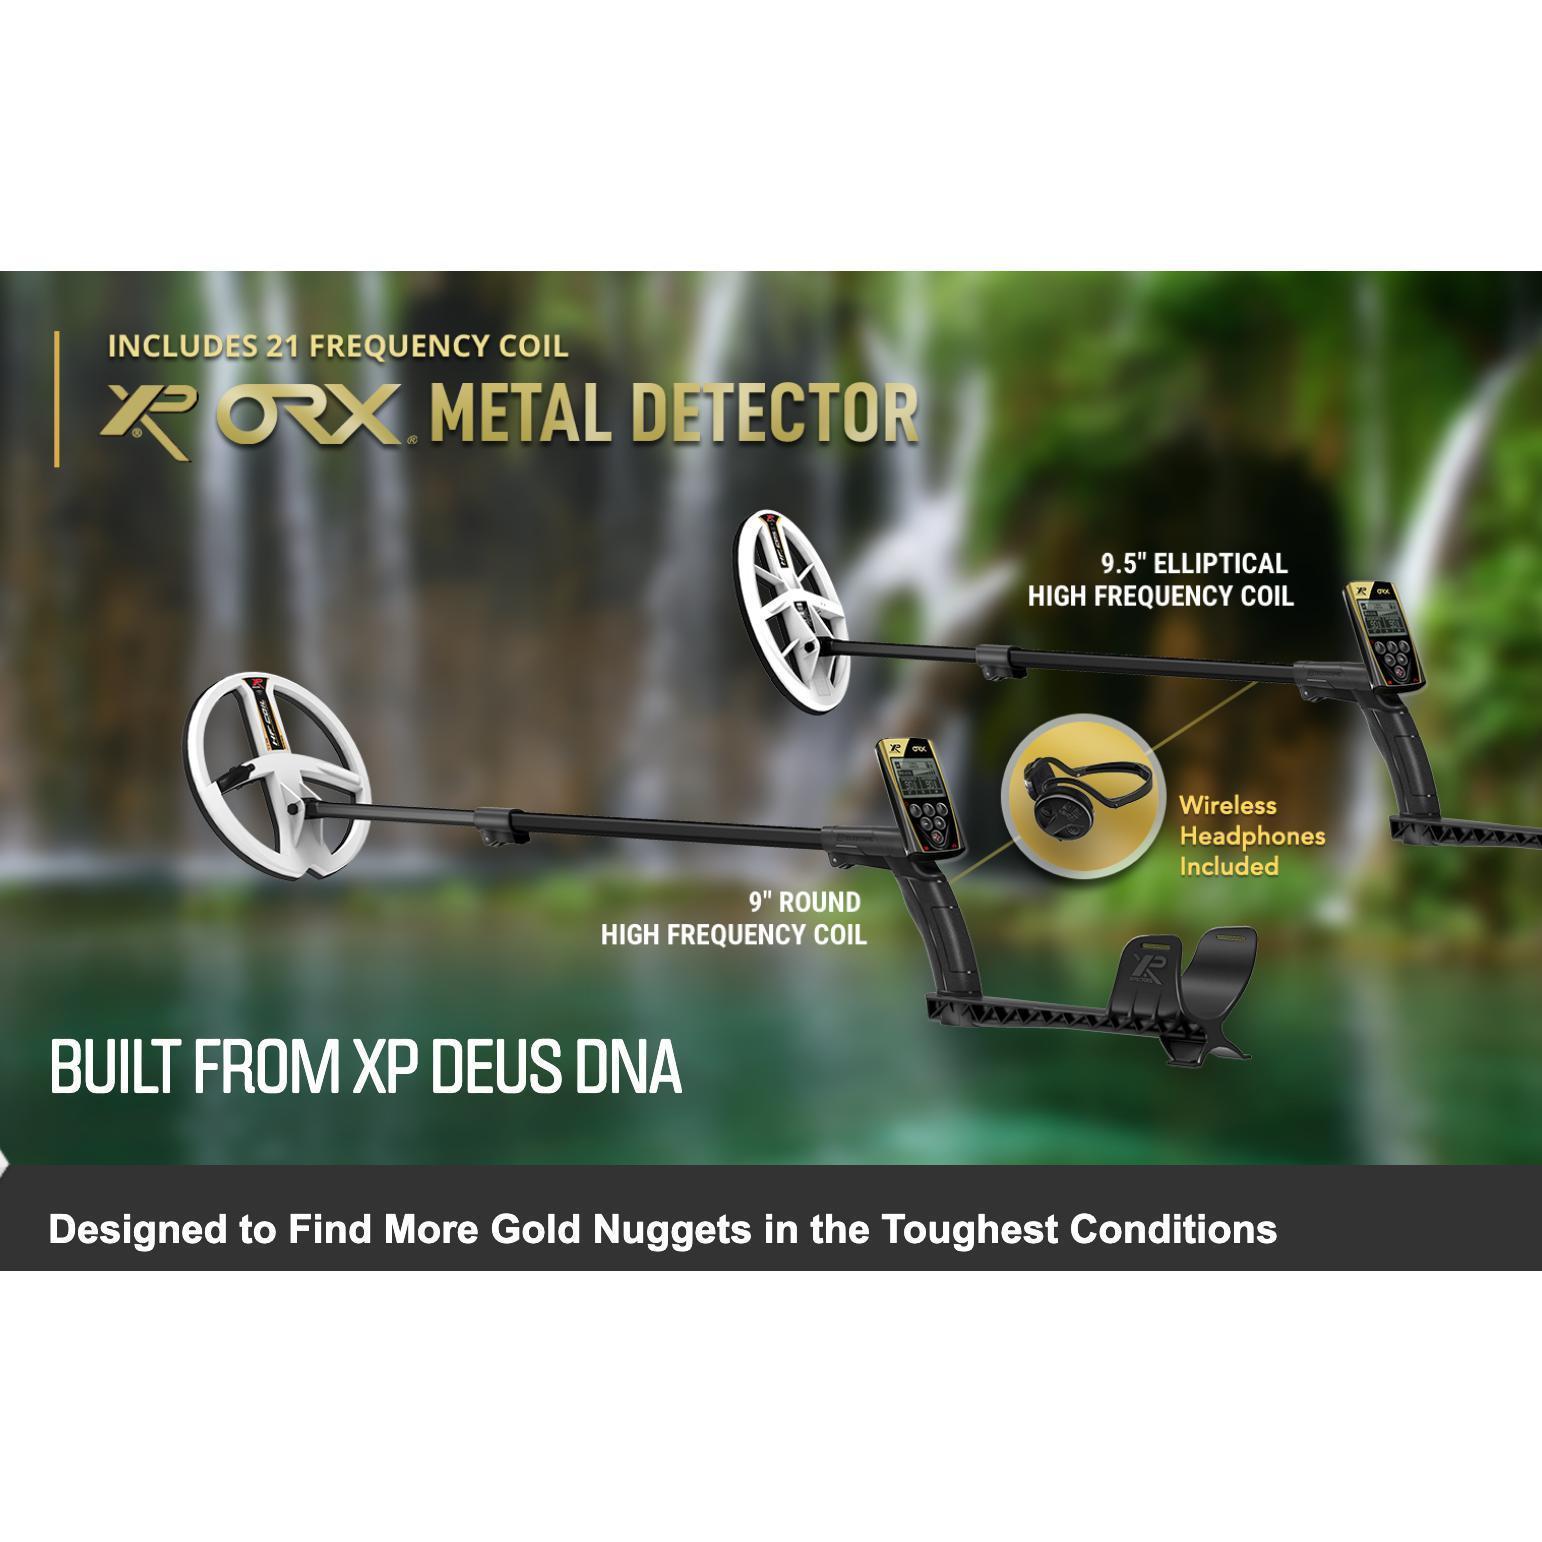 XP ORX Metal Detector 9" Round Coil & RC-Destination Gold Detectors